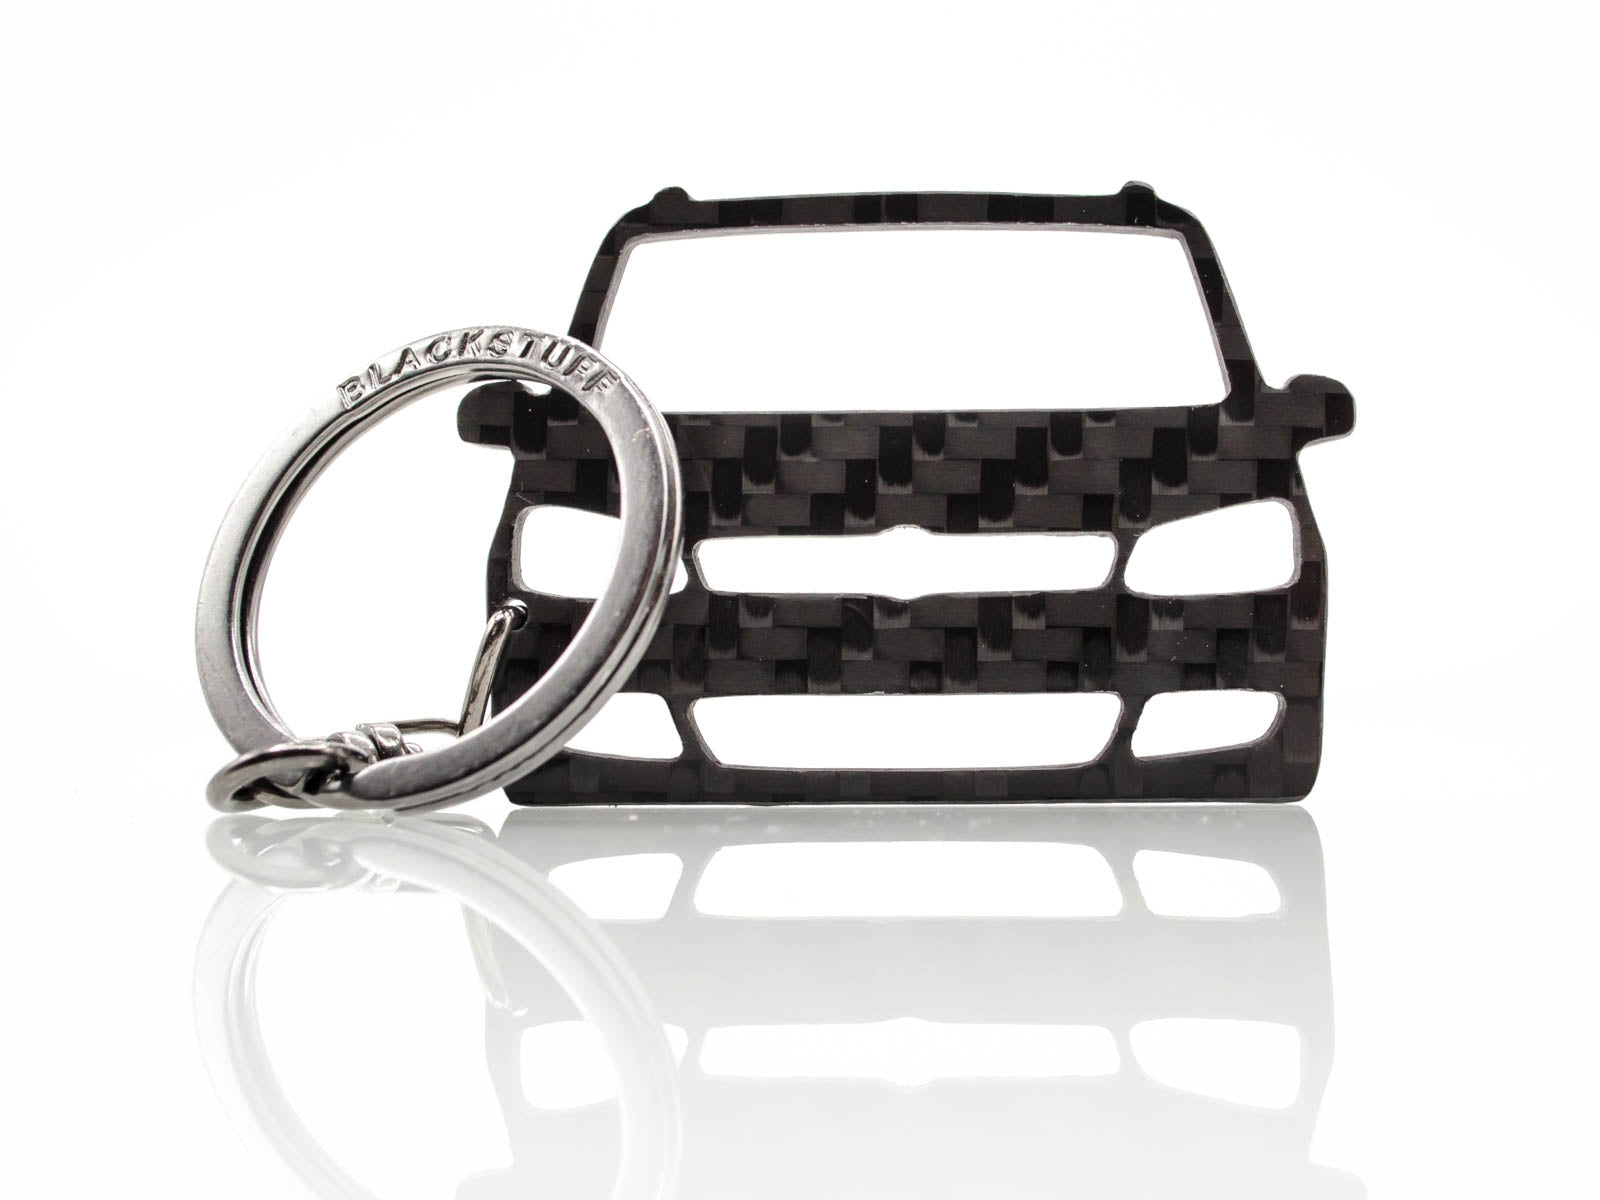 BlackStuff Carbon Fiber Keychain Keyring Ring Holder Compatible with Sharan 7N 2010 BS-862